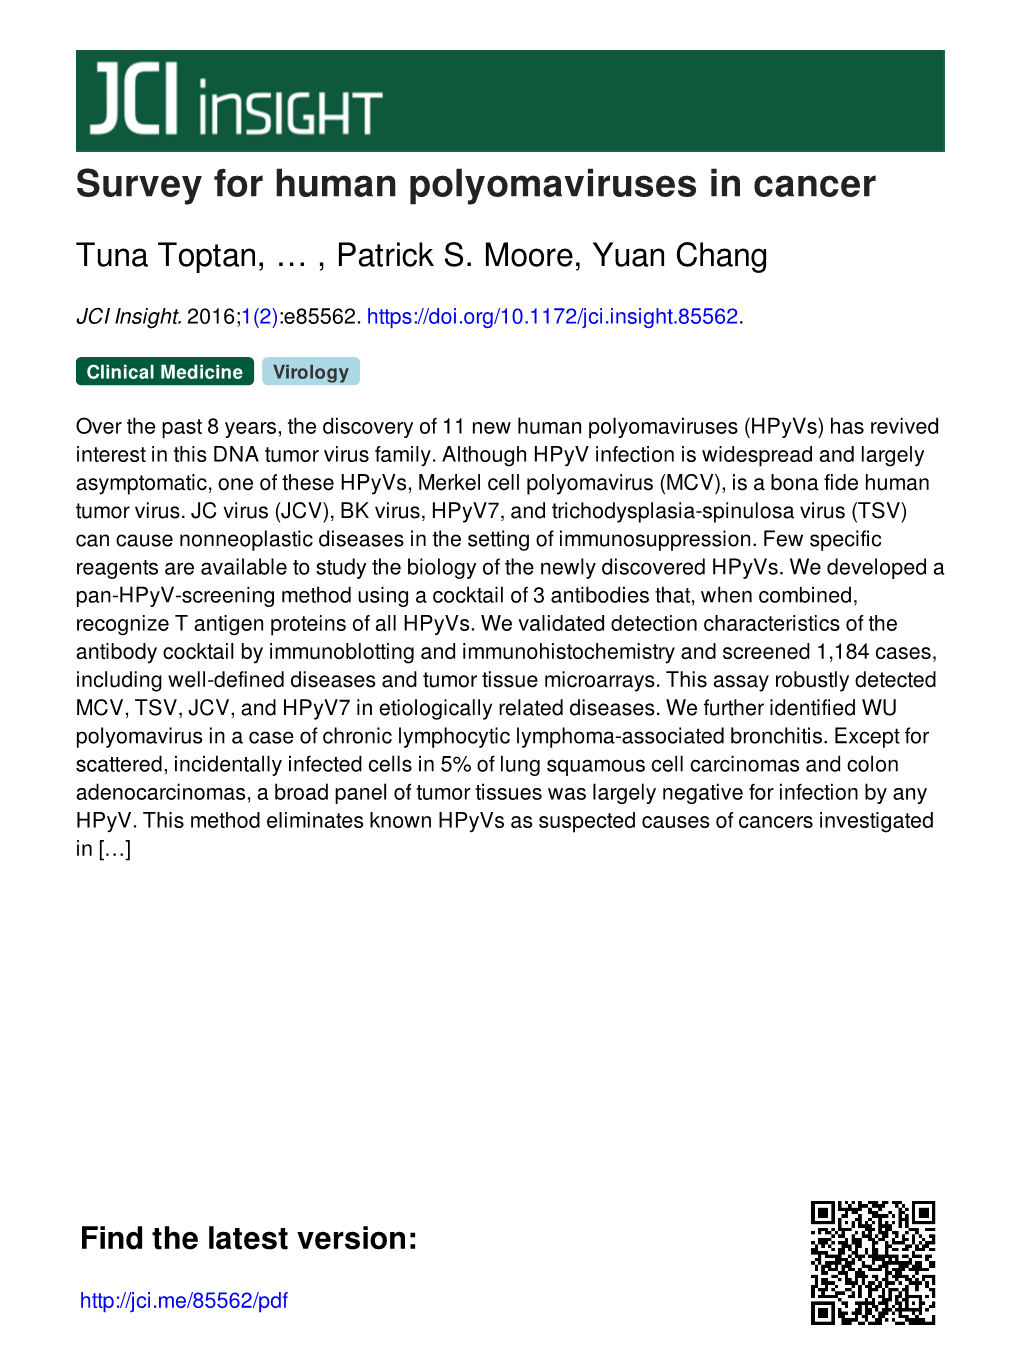 Survey for Human Polyomaviruses in Cancer